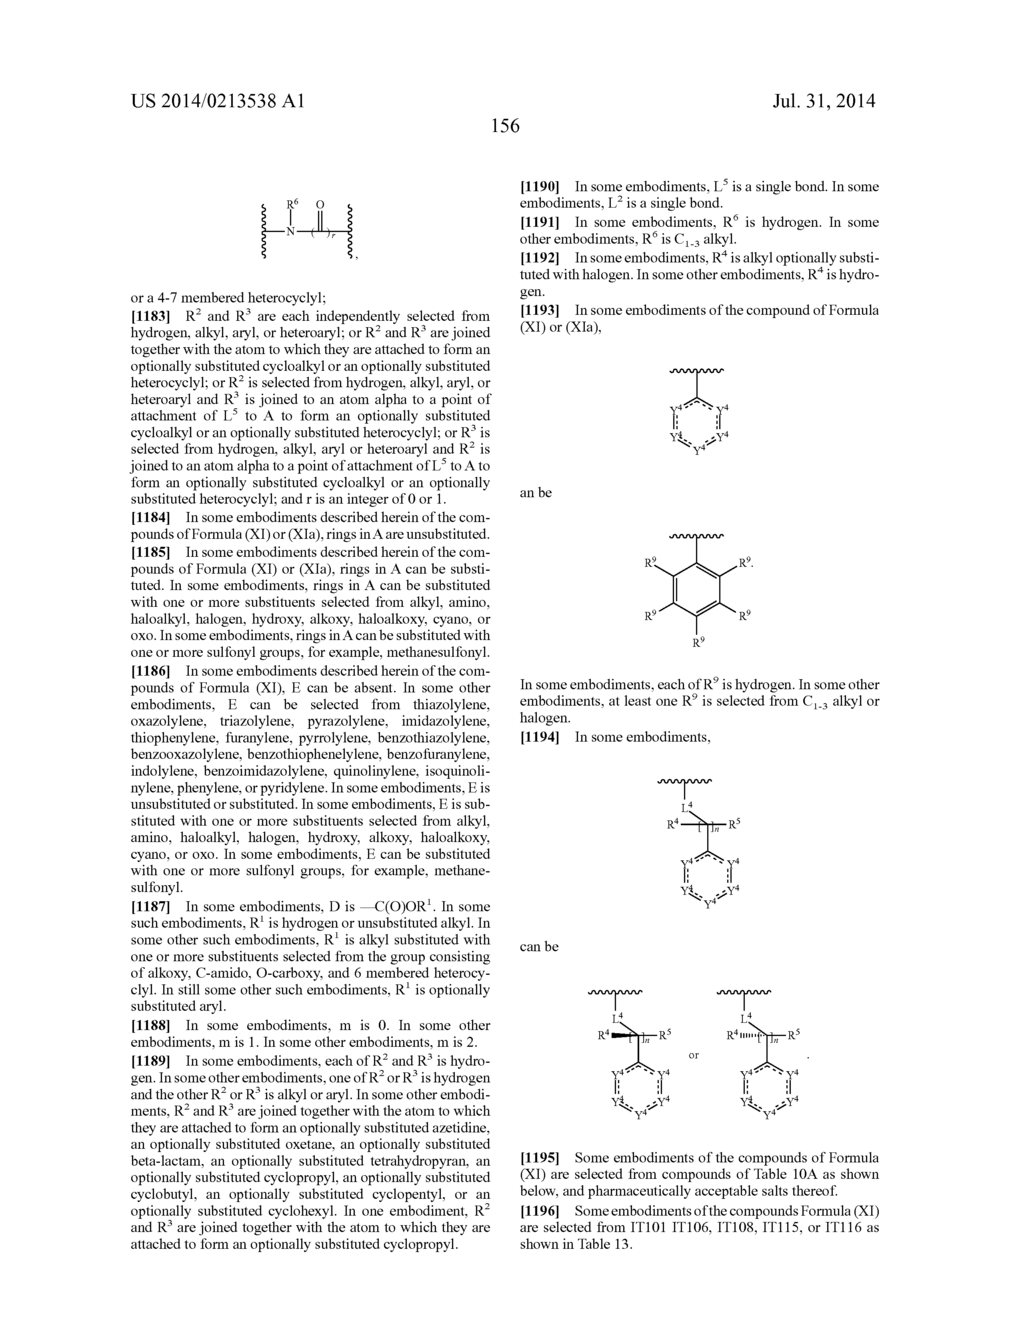 LYSOPHOSPHATIDIC ACID RECEPTOR ANTAGONISTS - diagram, schematic, and image 157